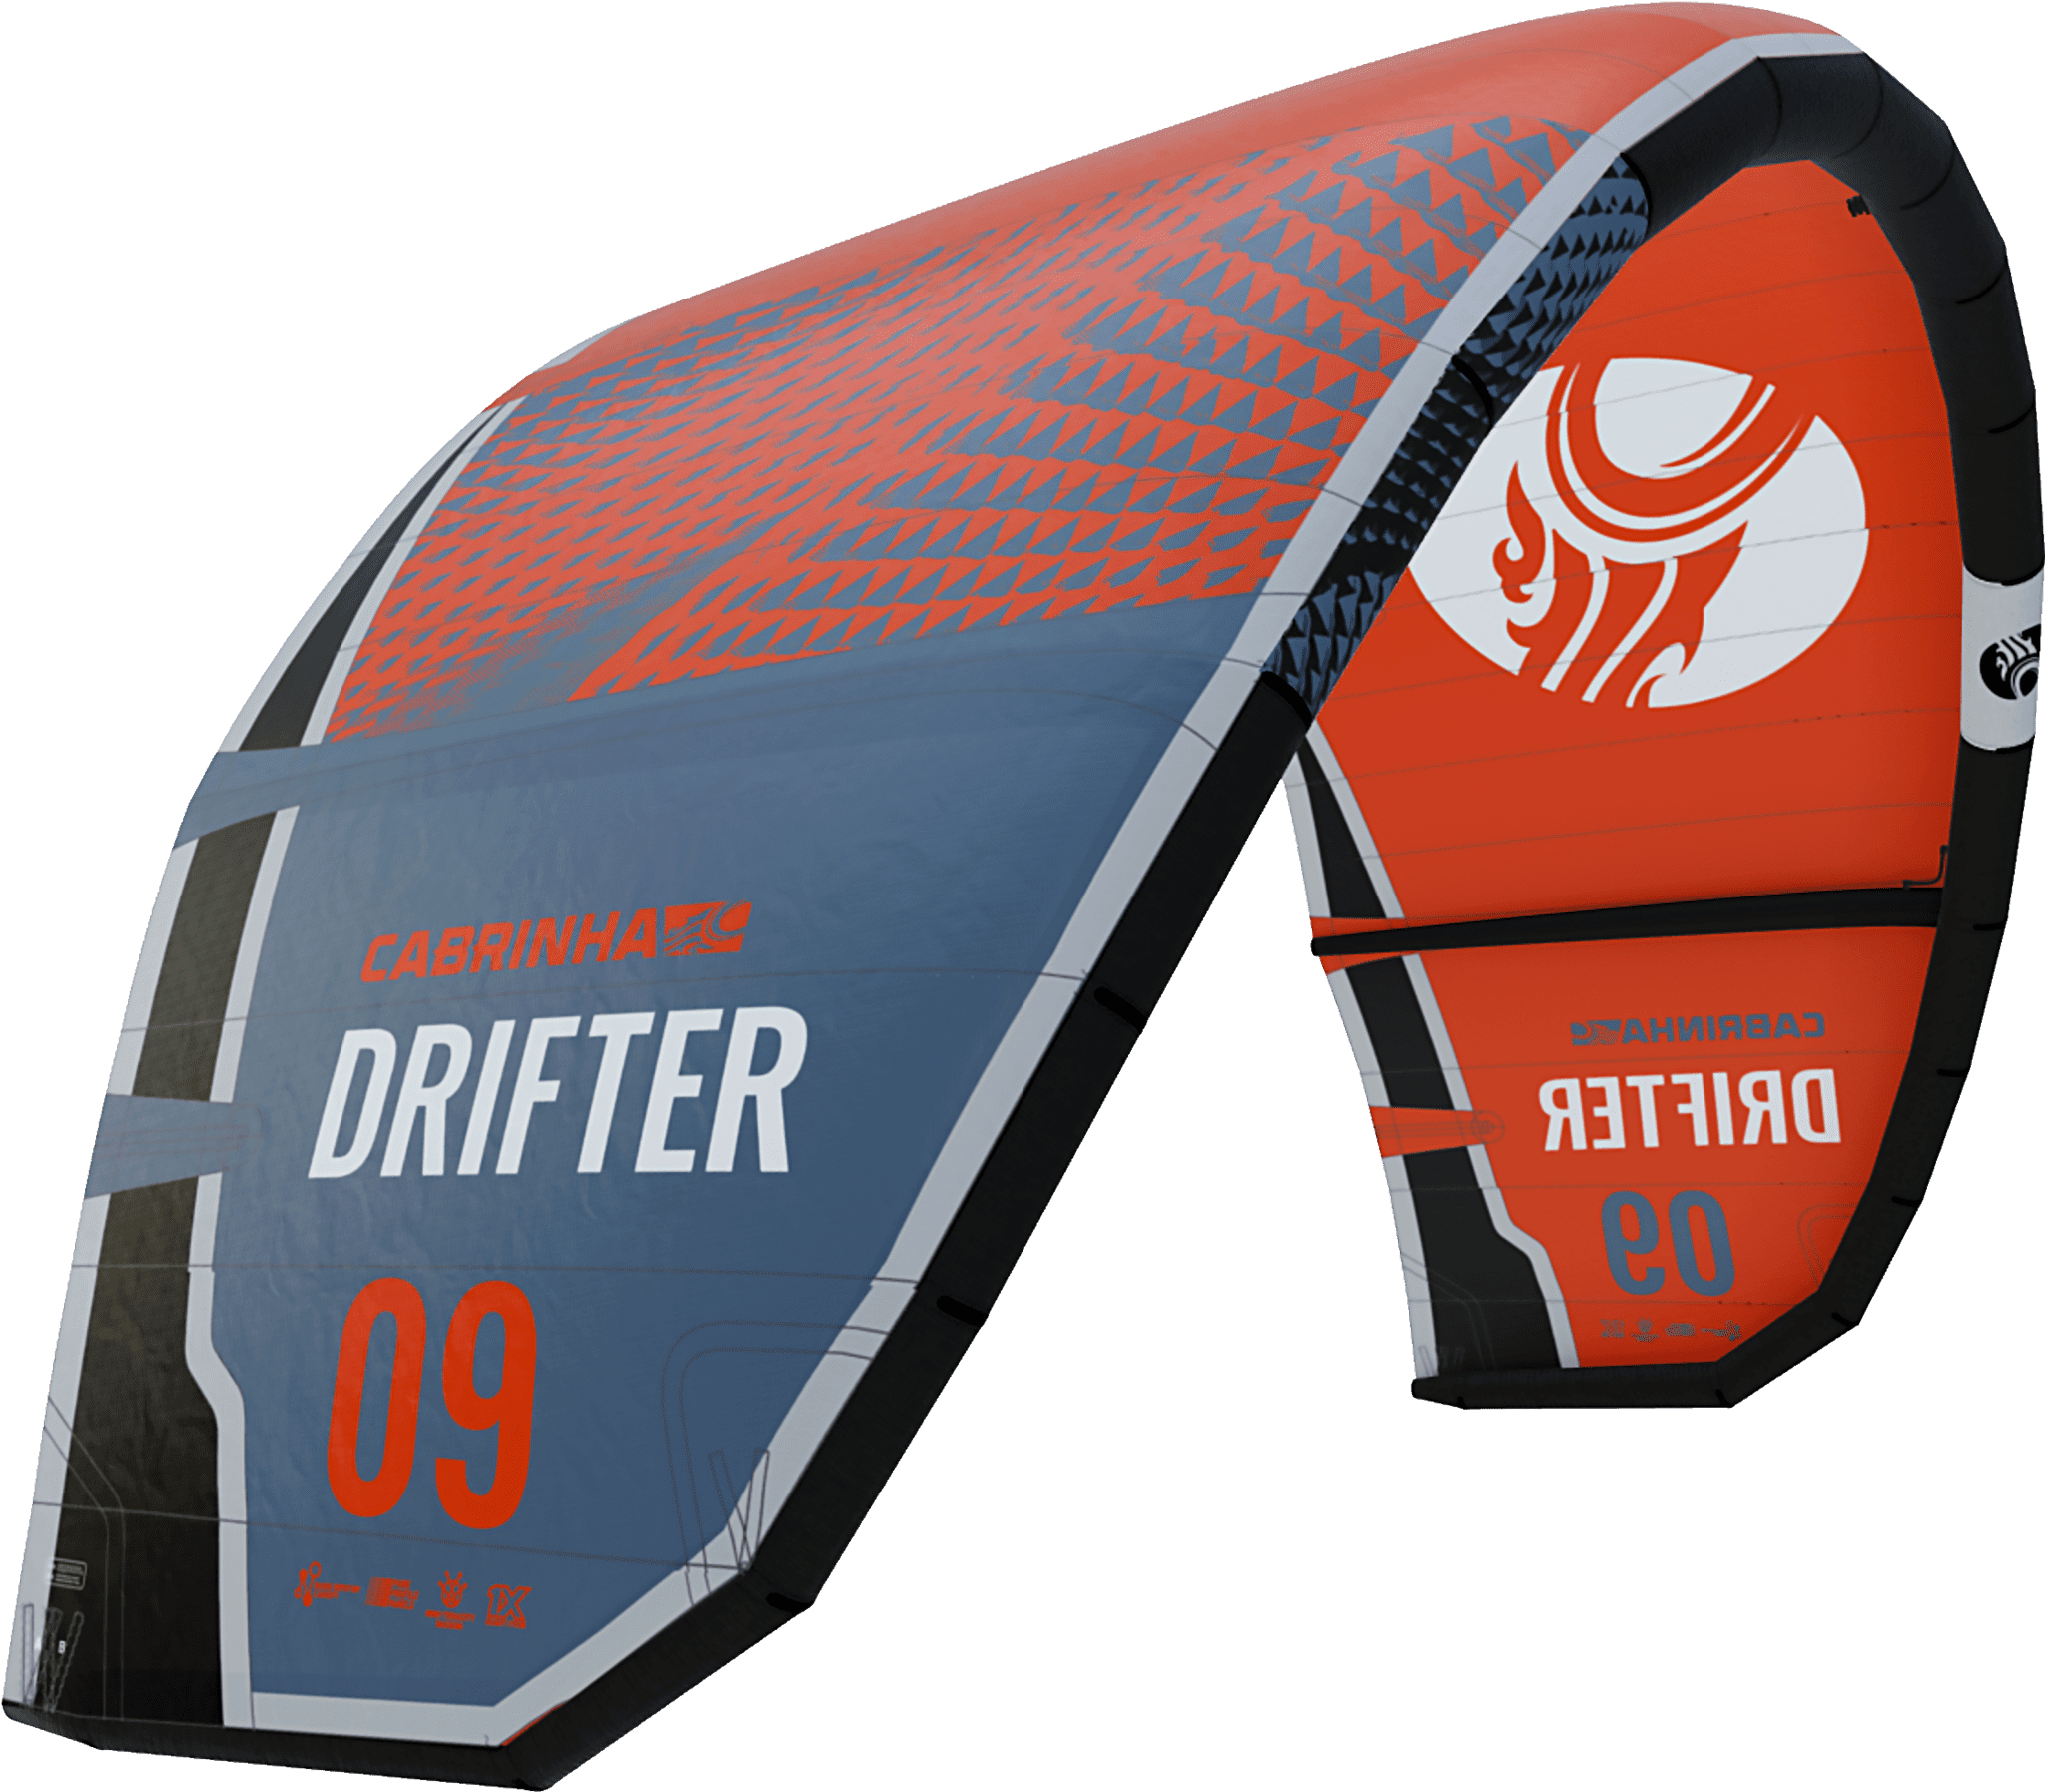 2022 Cabrinha Drifter Kite